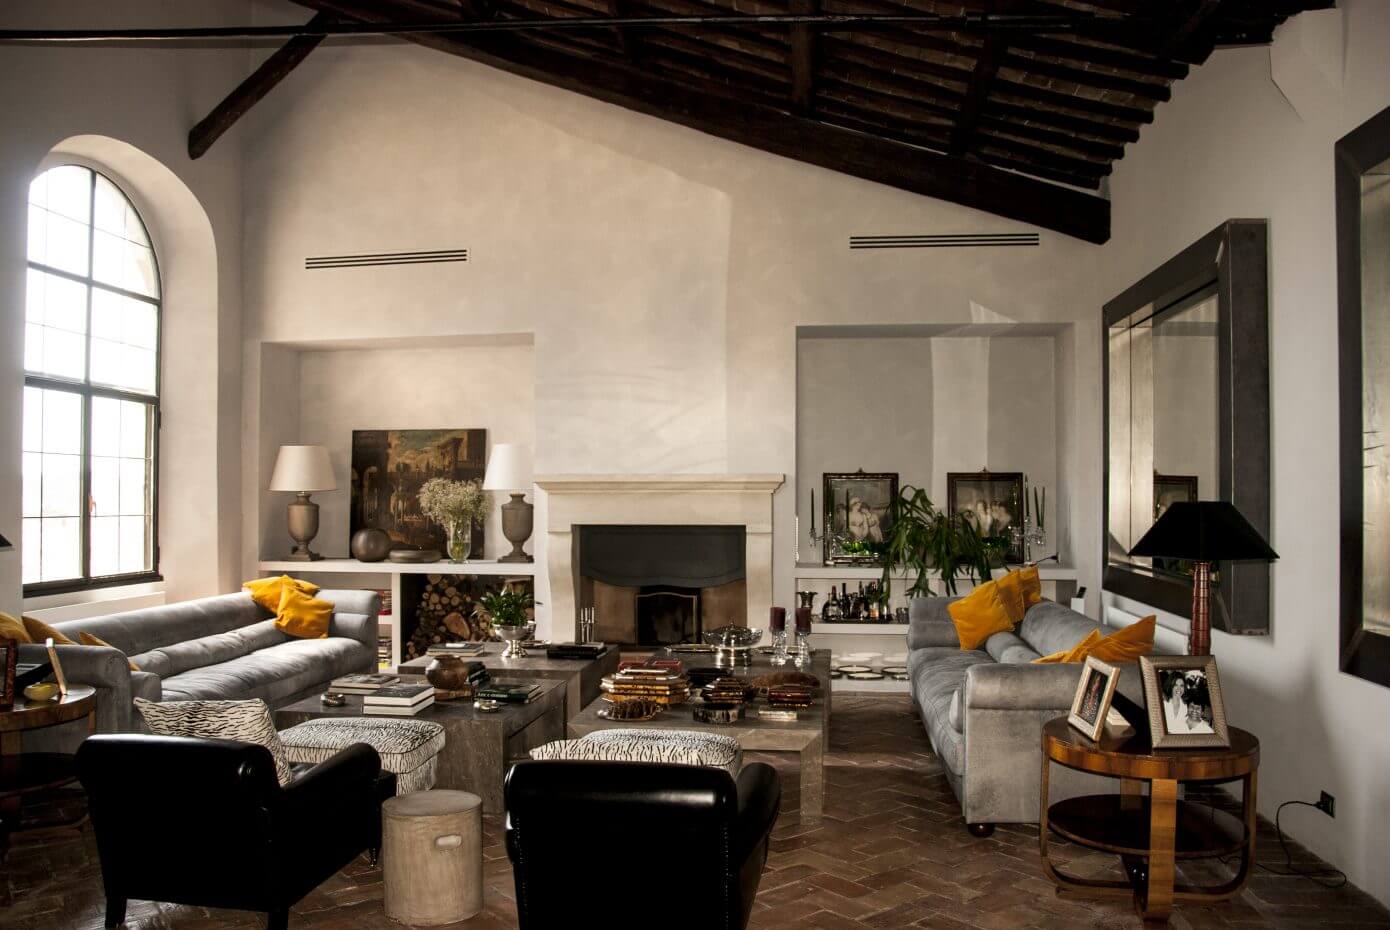 Residence in Rome by Studio Agnello & Associati